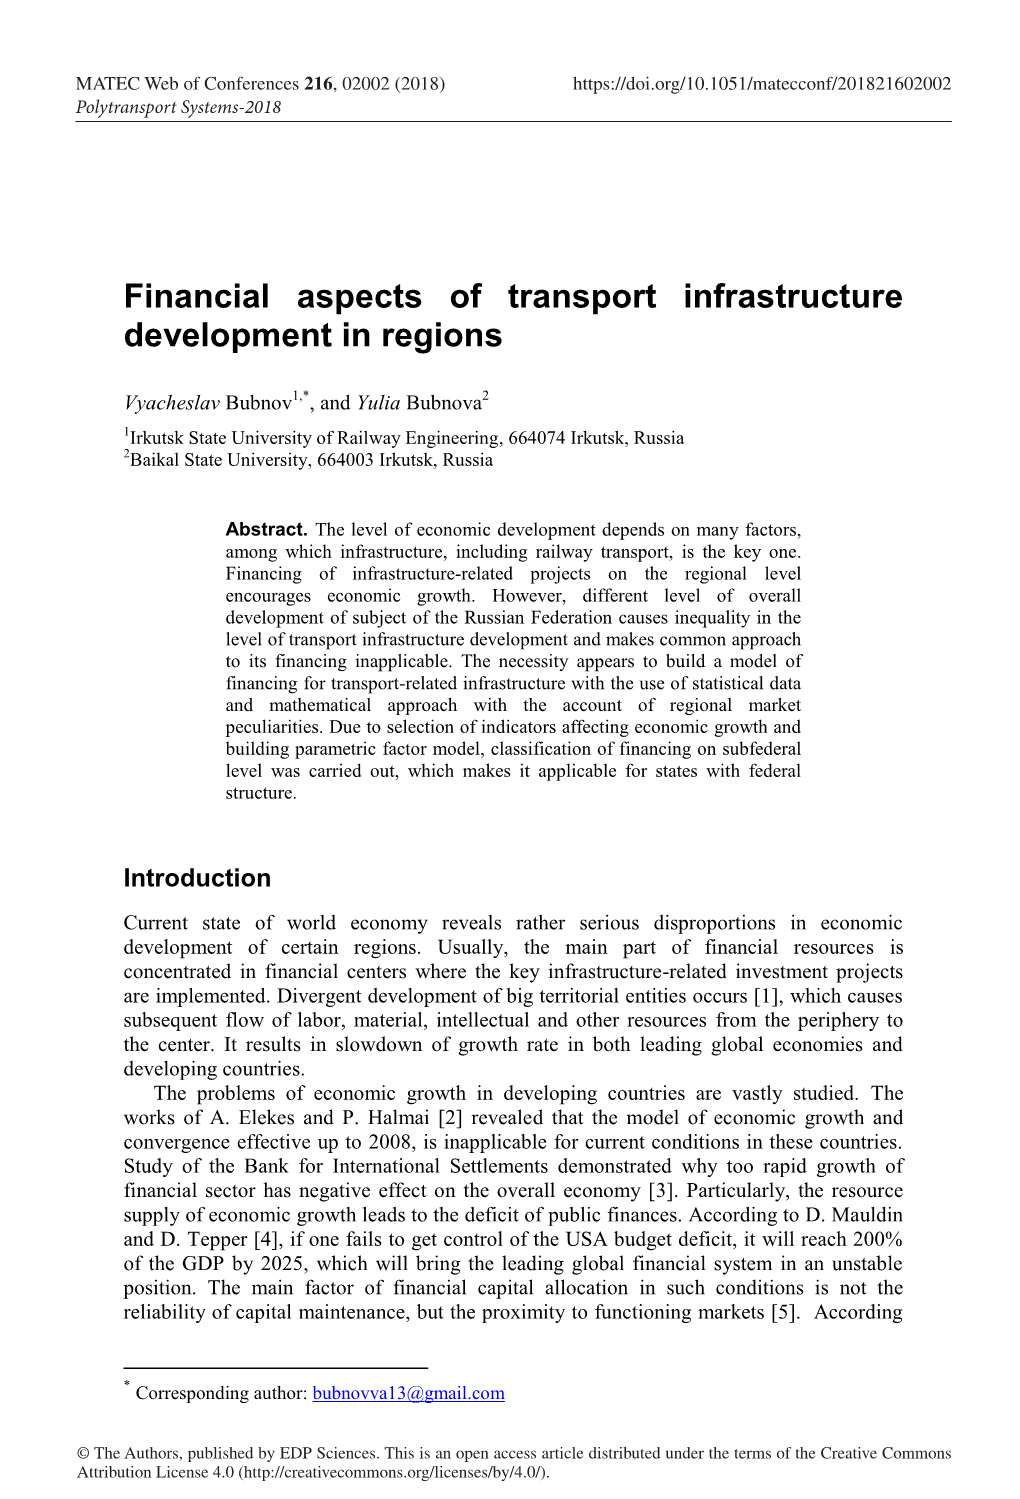 Financial Aspects of Transport Infrastructure Development in Regions